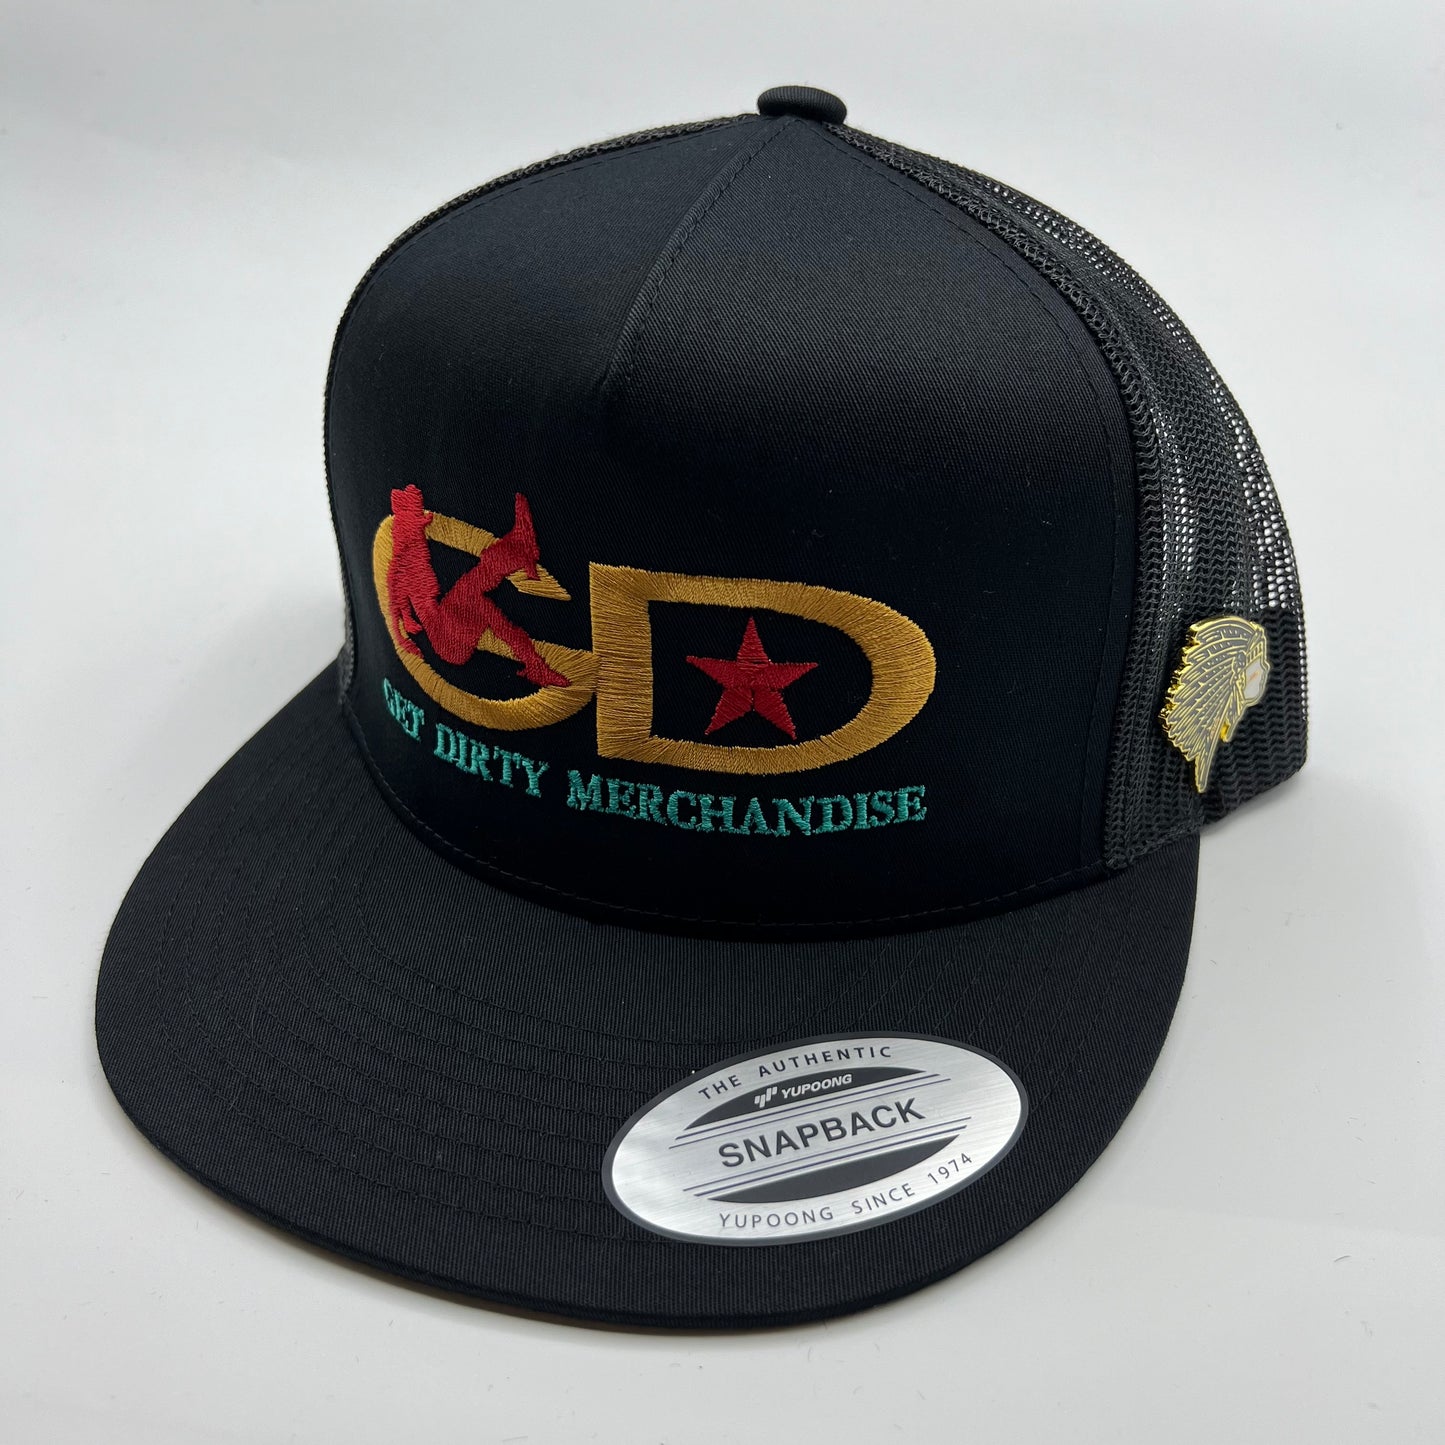 Get Dirty Merchandise Beta Gold/RD Black Trucker Hat